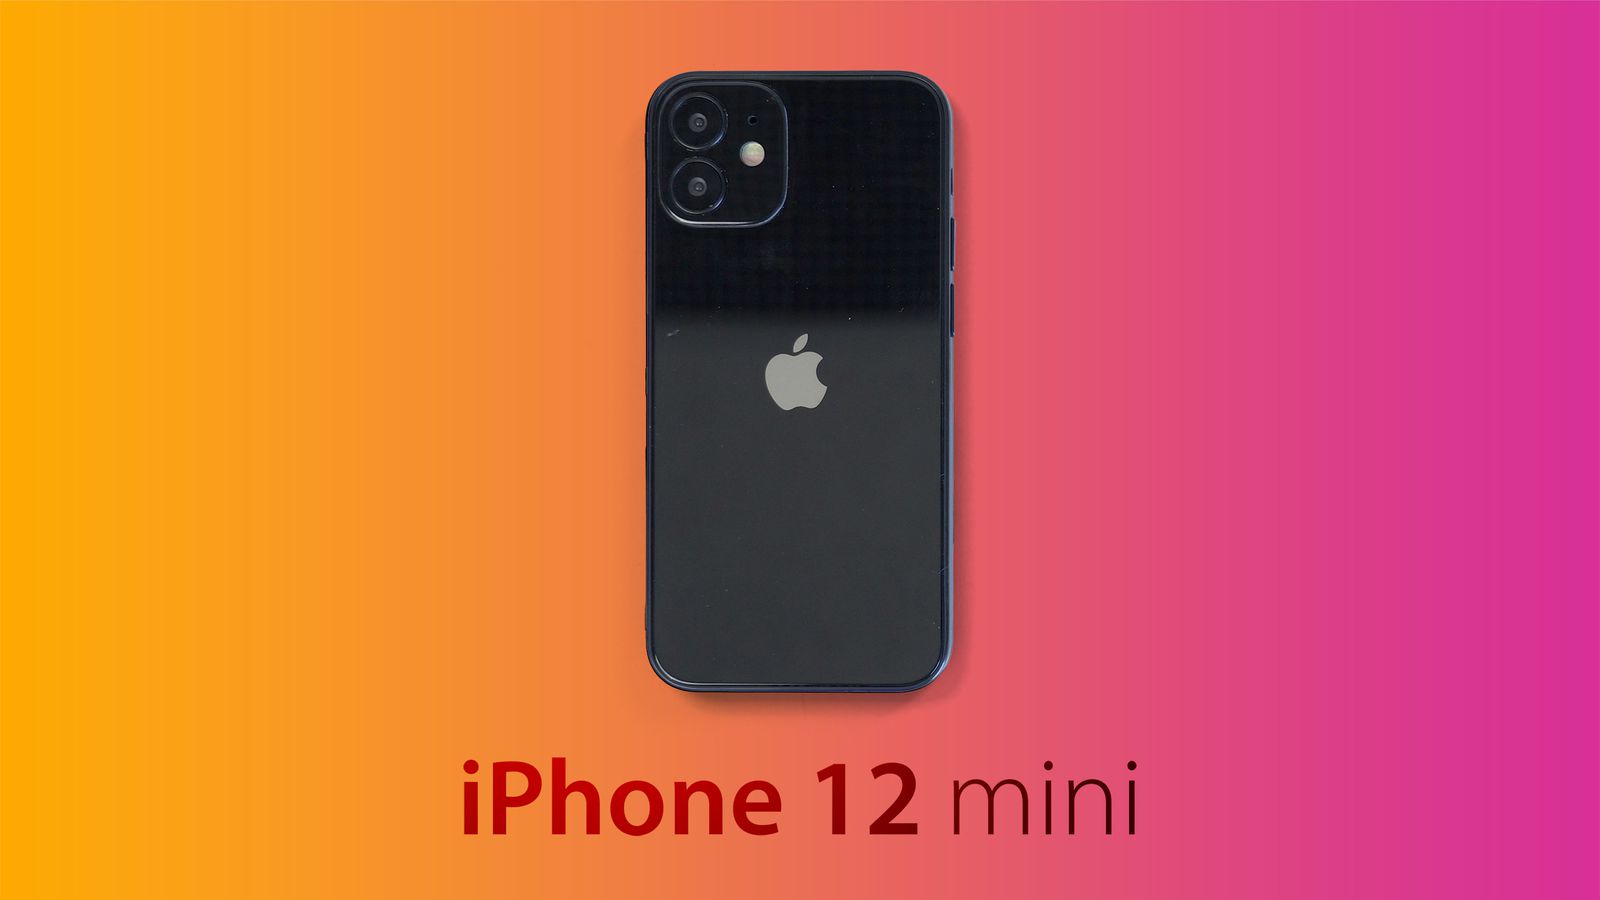 Apple iPhone 12 mini - Full phone specifications